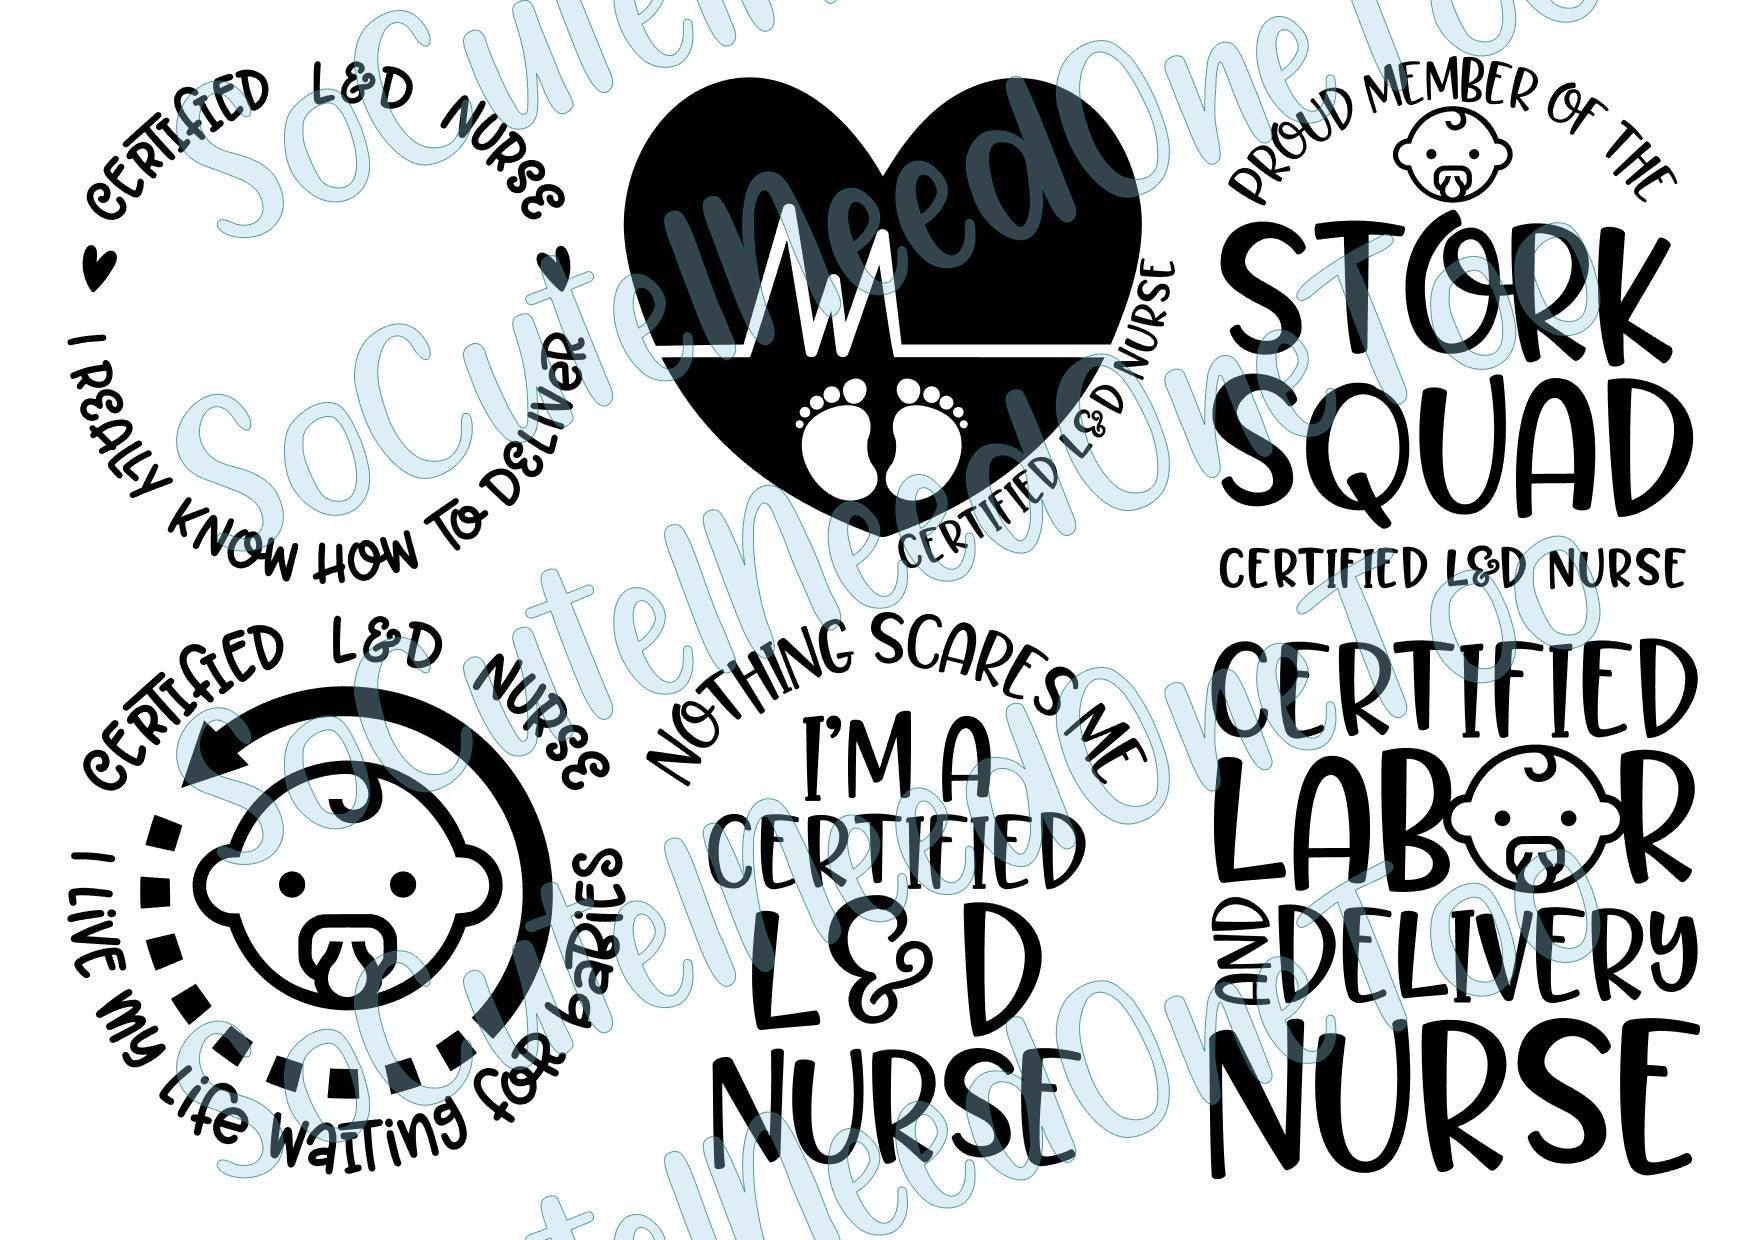 Certified L&D Nurse Waterslide Decals - SoCuteINeedOneToo